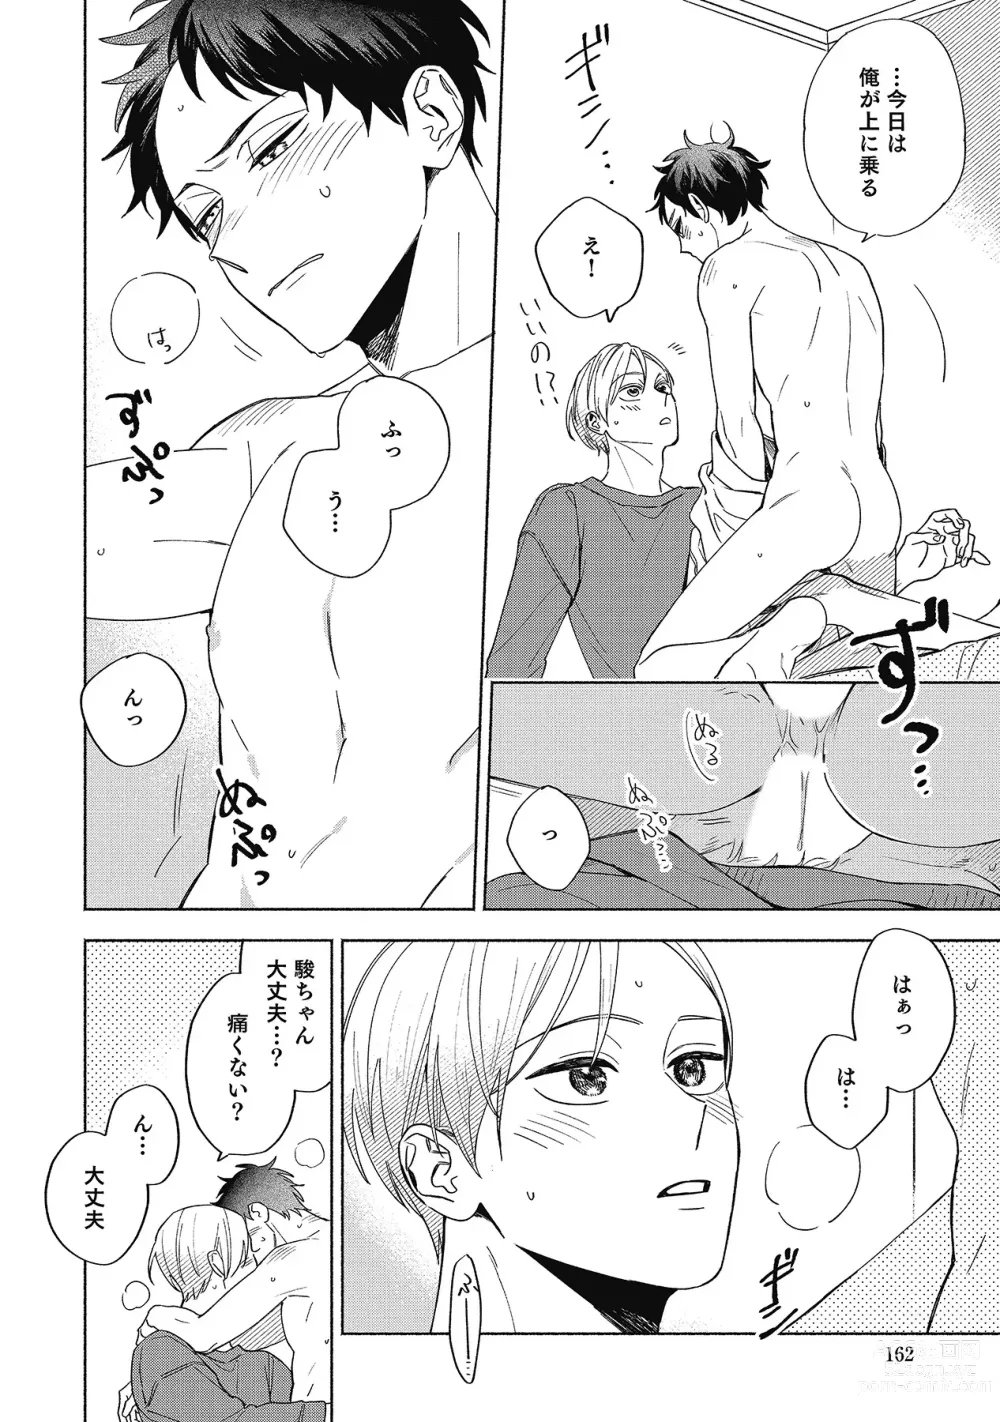 Page 162 of manga Sentimental Darling